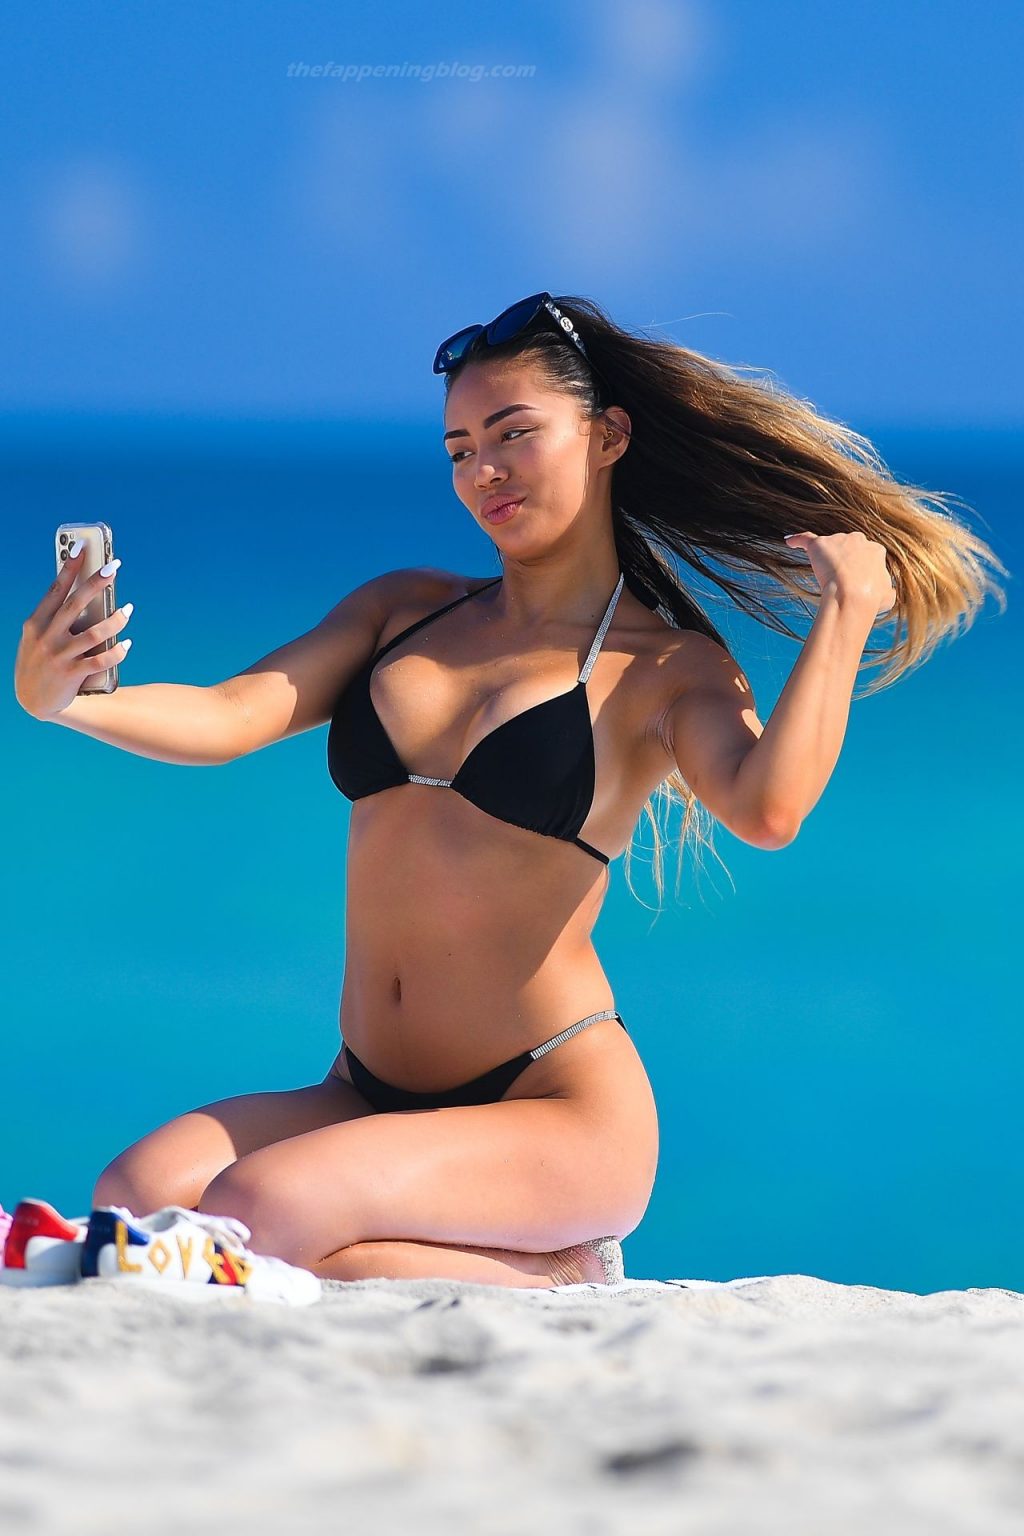 Montana Yao Shows Her Sexy Bikini Body on the Beach in Miami (55 Photos)